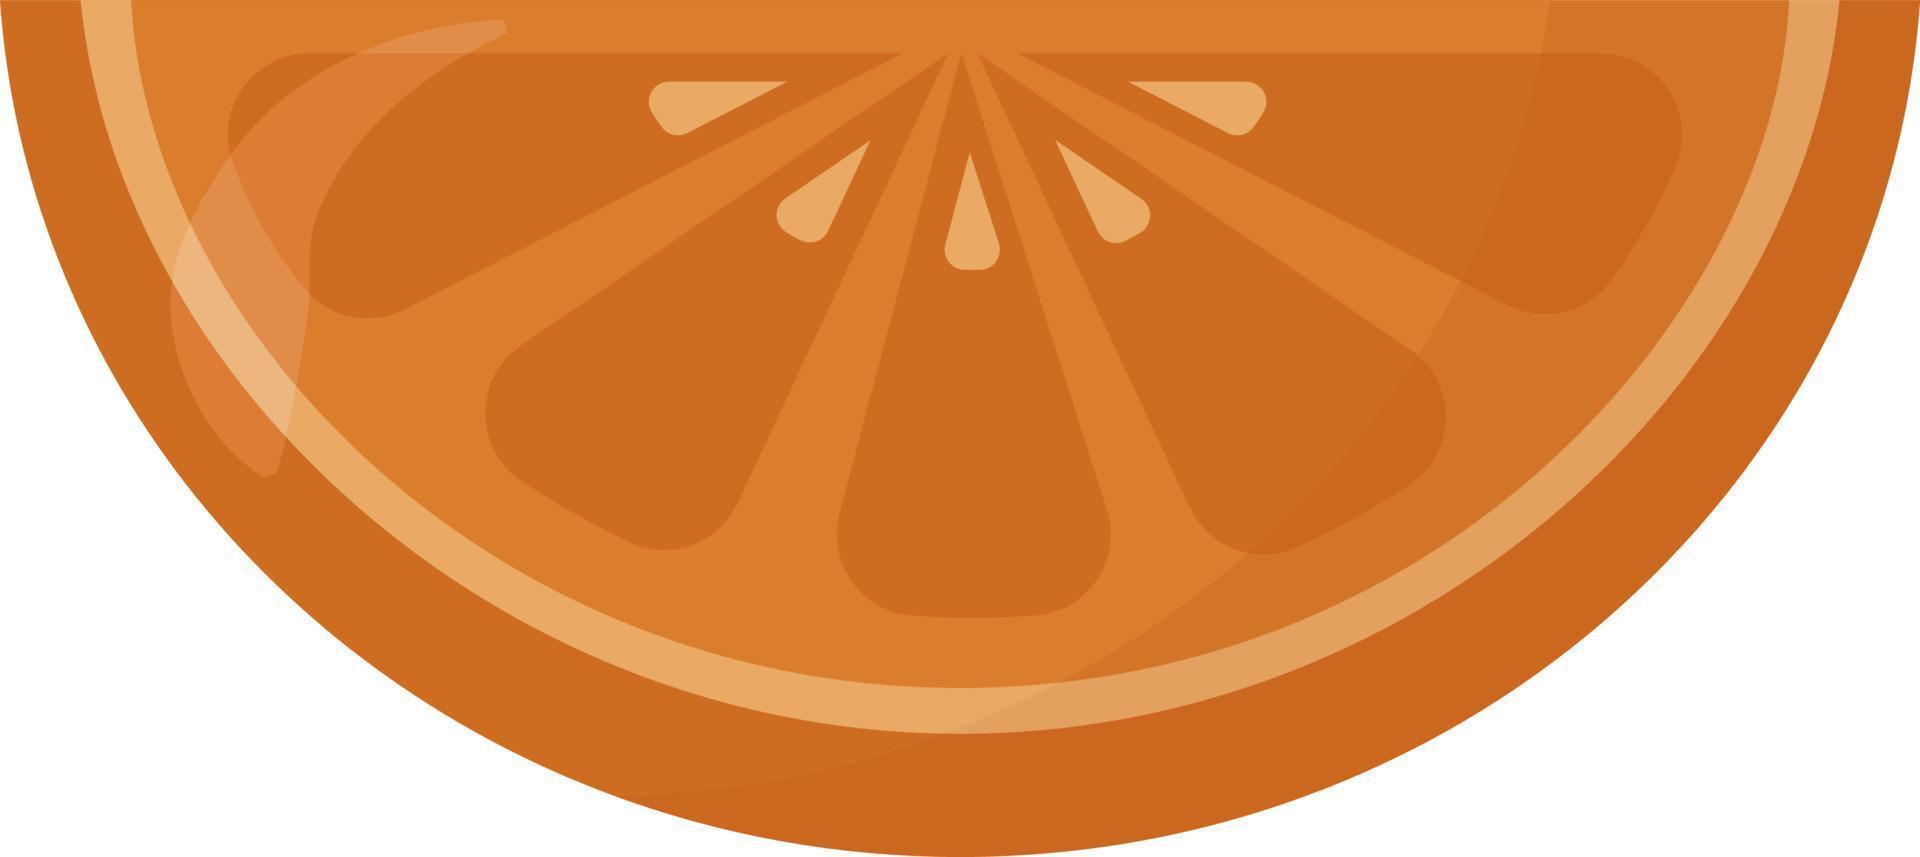 Slice of orange , illustration, vector on white background